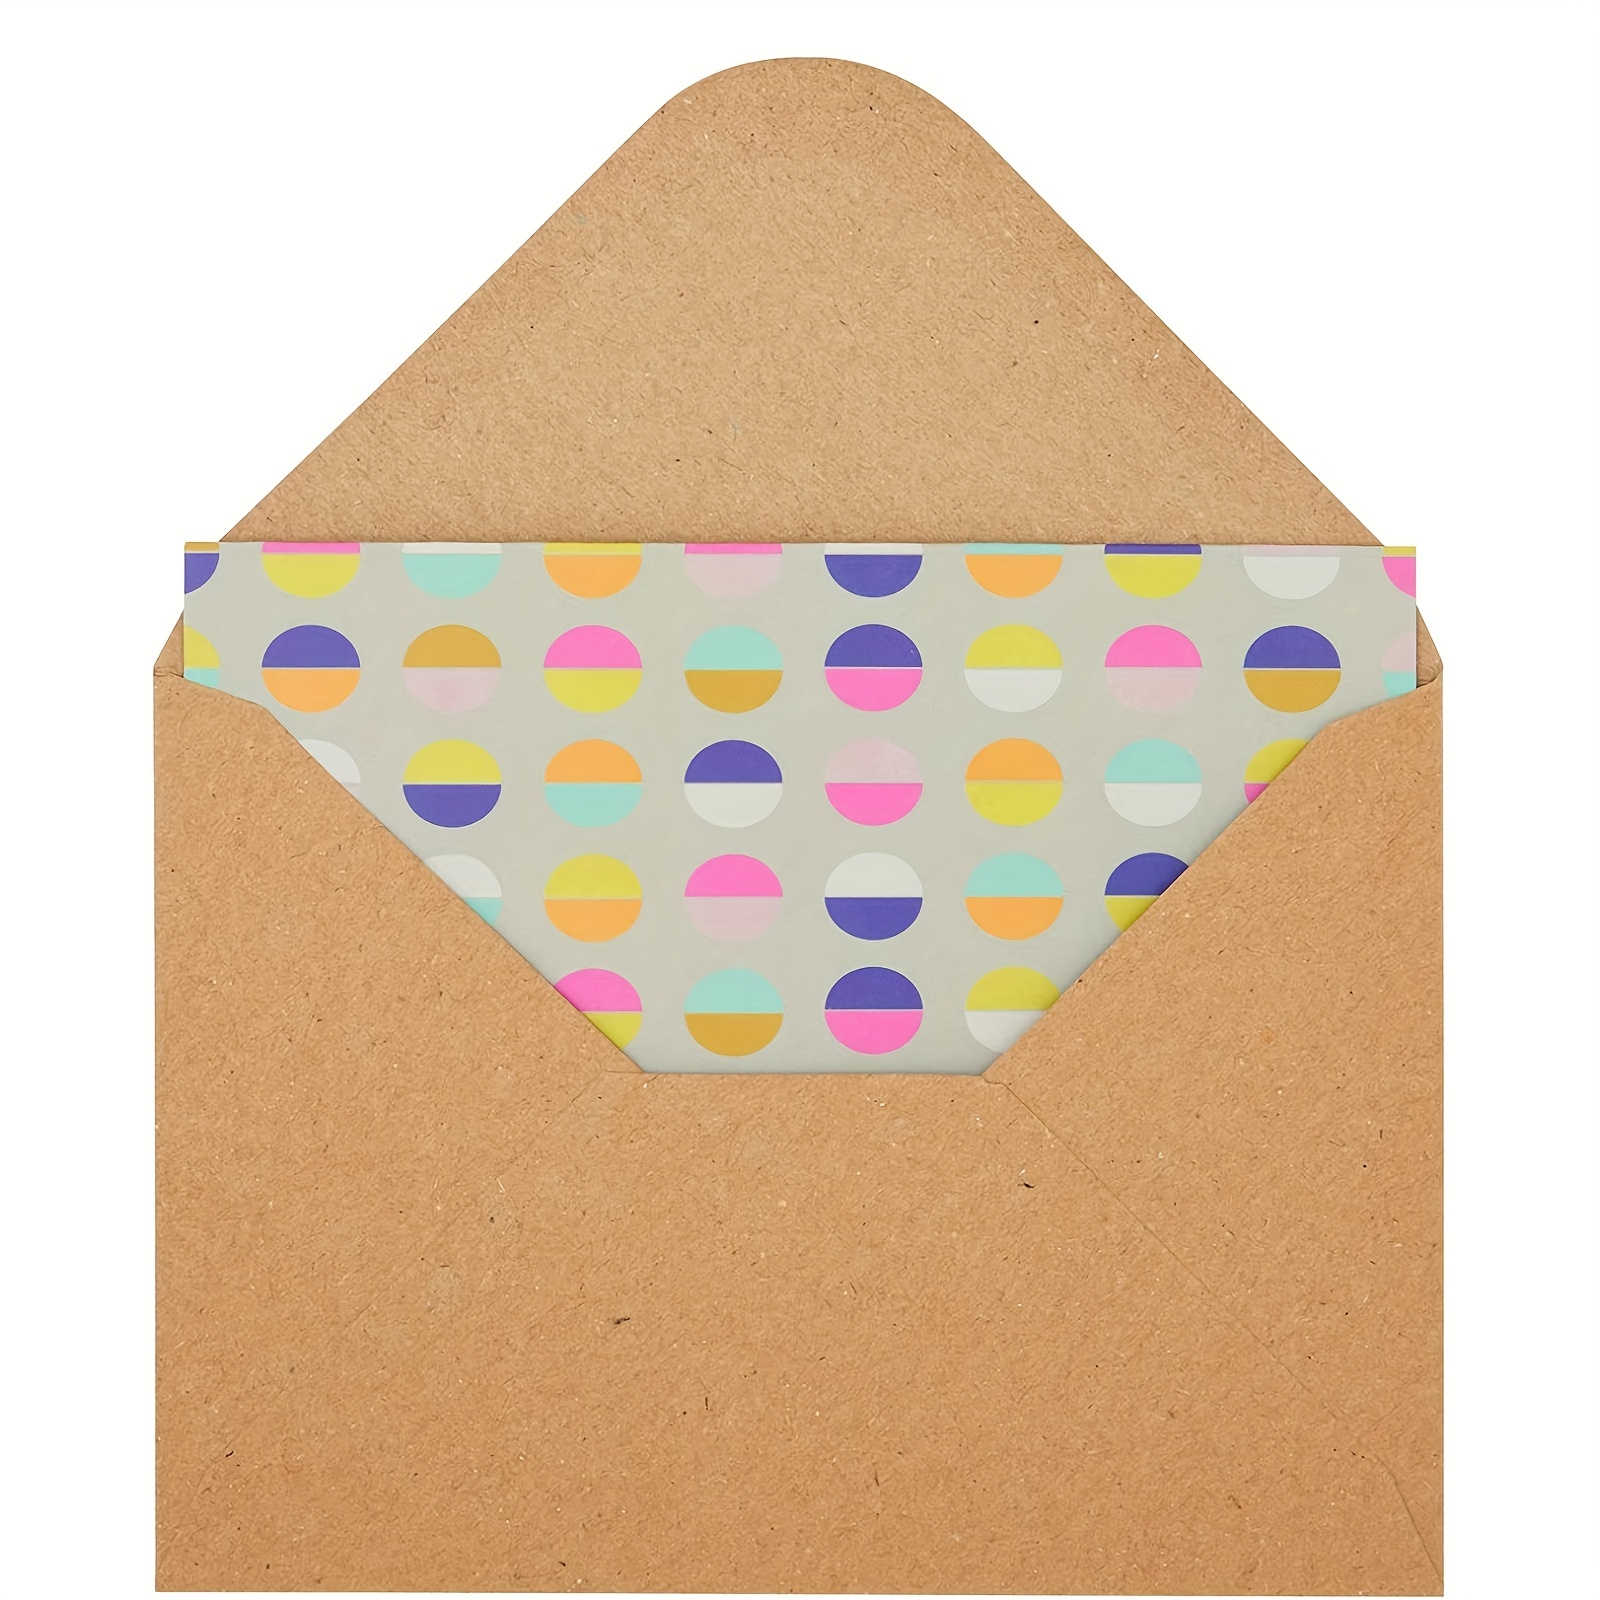 Envelope Template / 4x6 Inch Envelope / Printable Envelope 